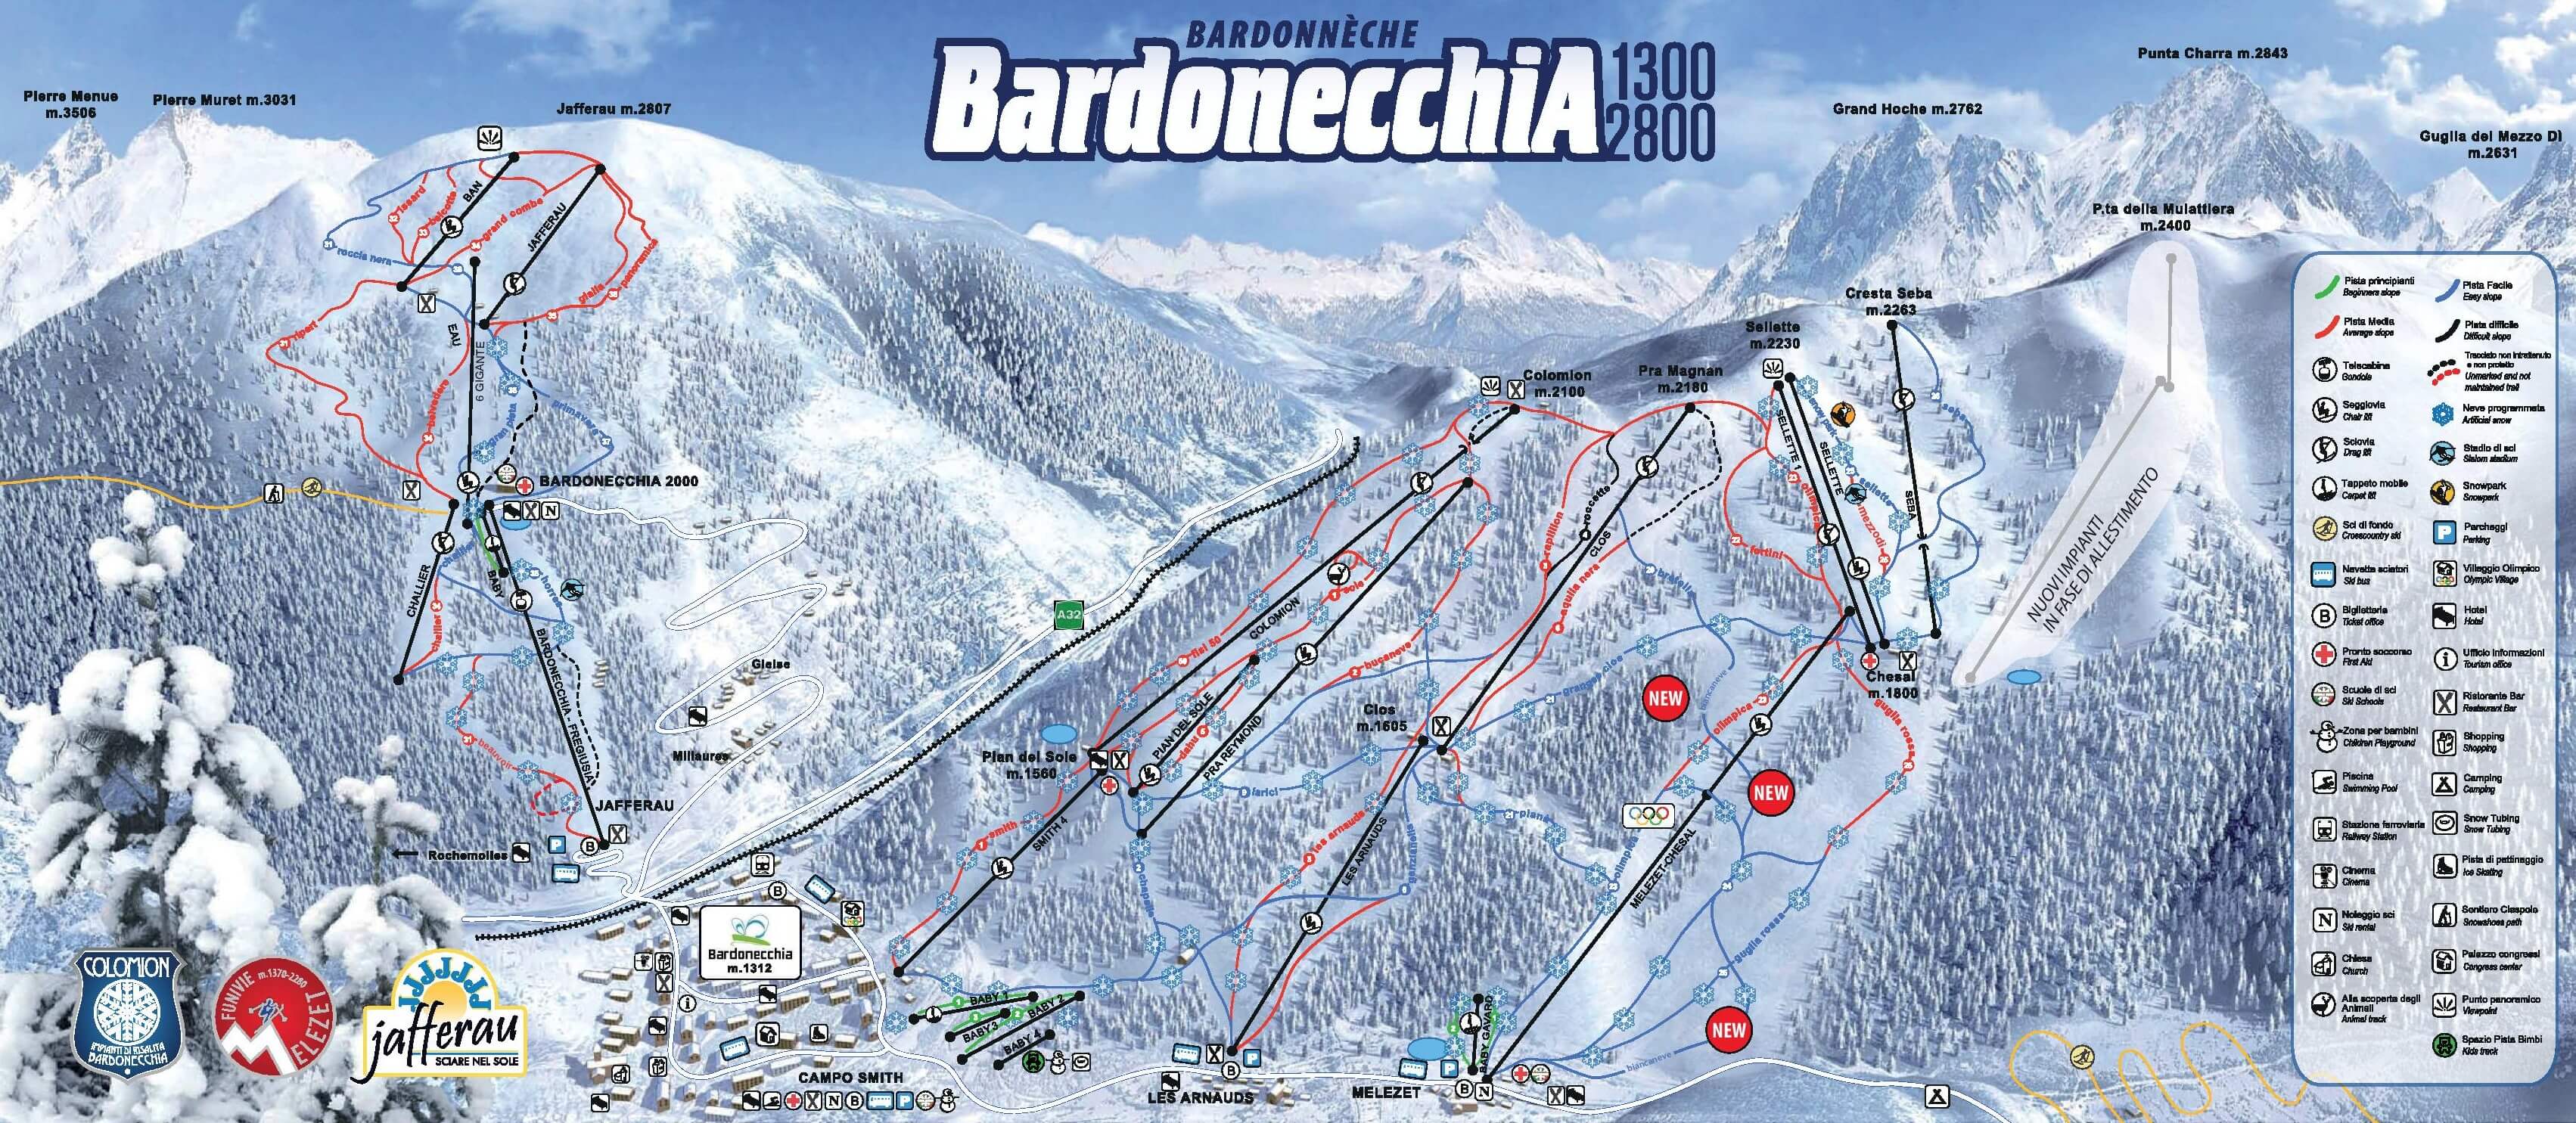 Bardonecchia slopes